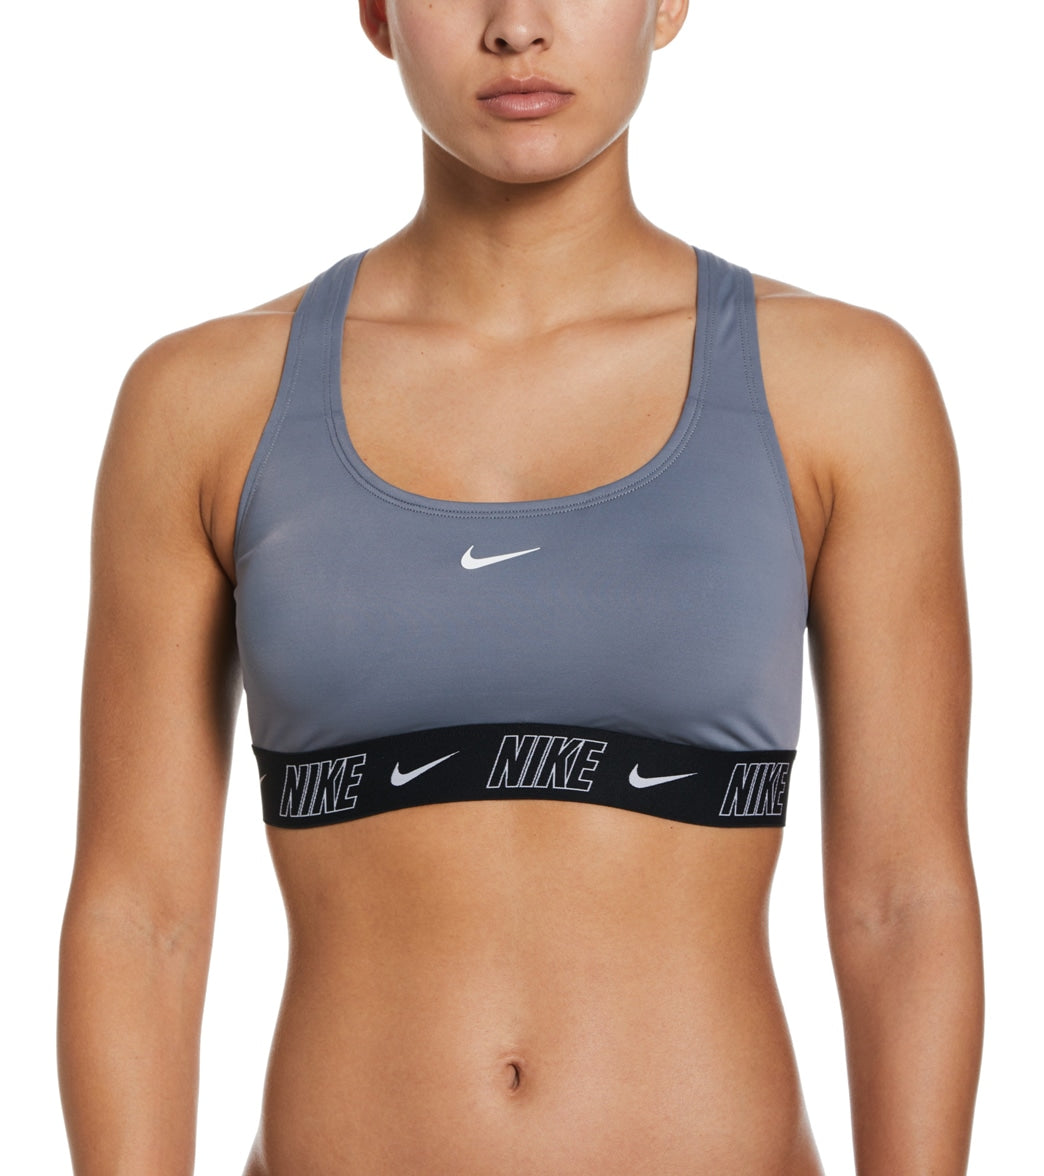 Nike Women's Racerback Bikini Top at SwimOutlet.com